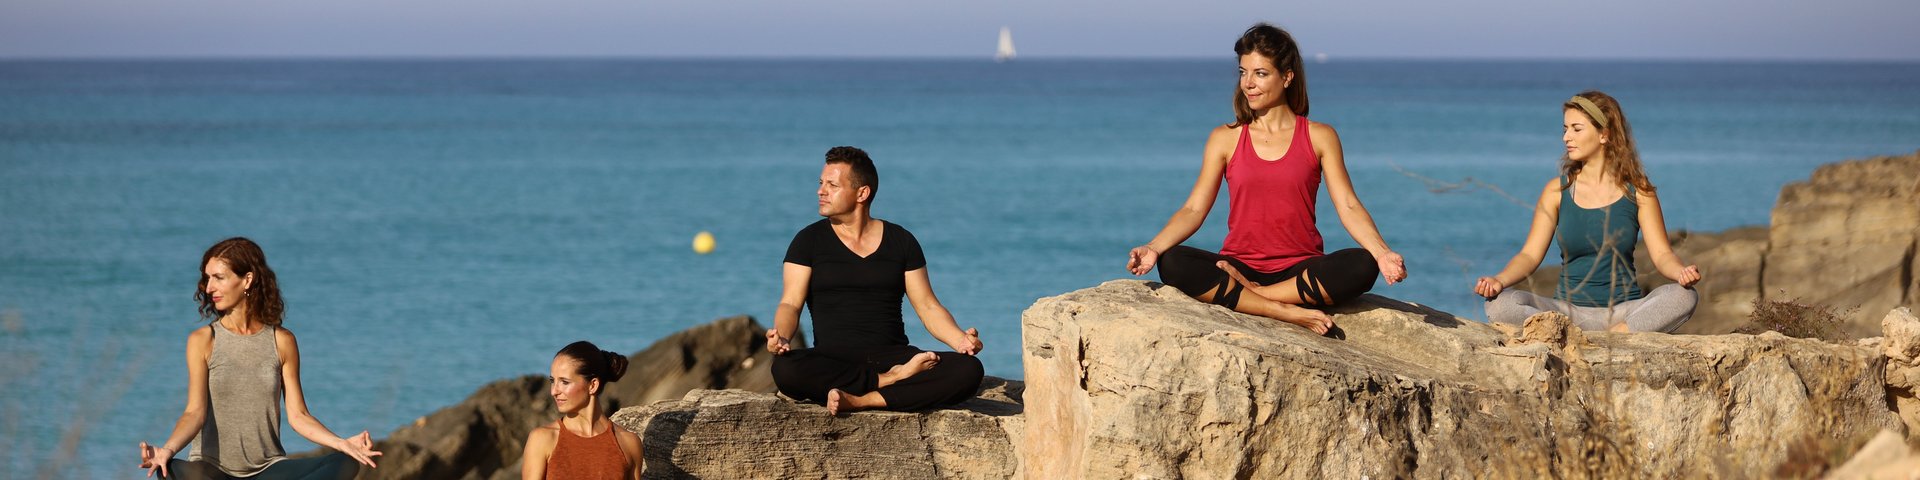 Yoga Gruppe am Meer 